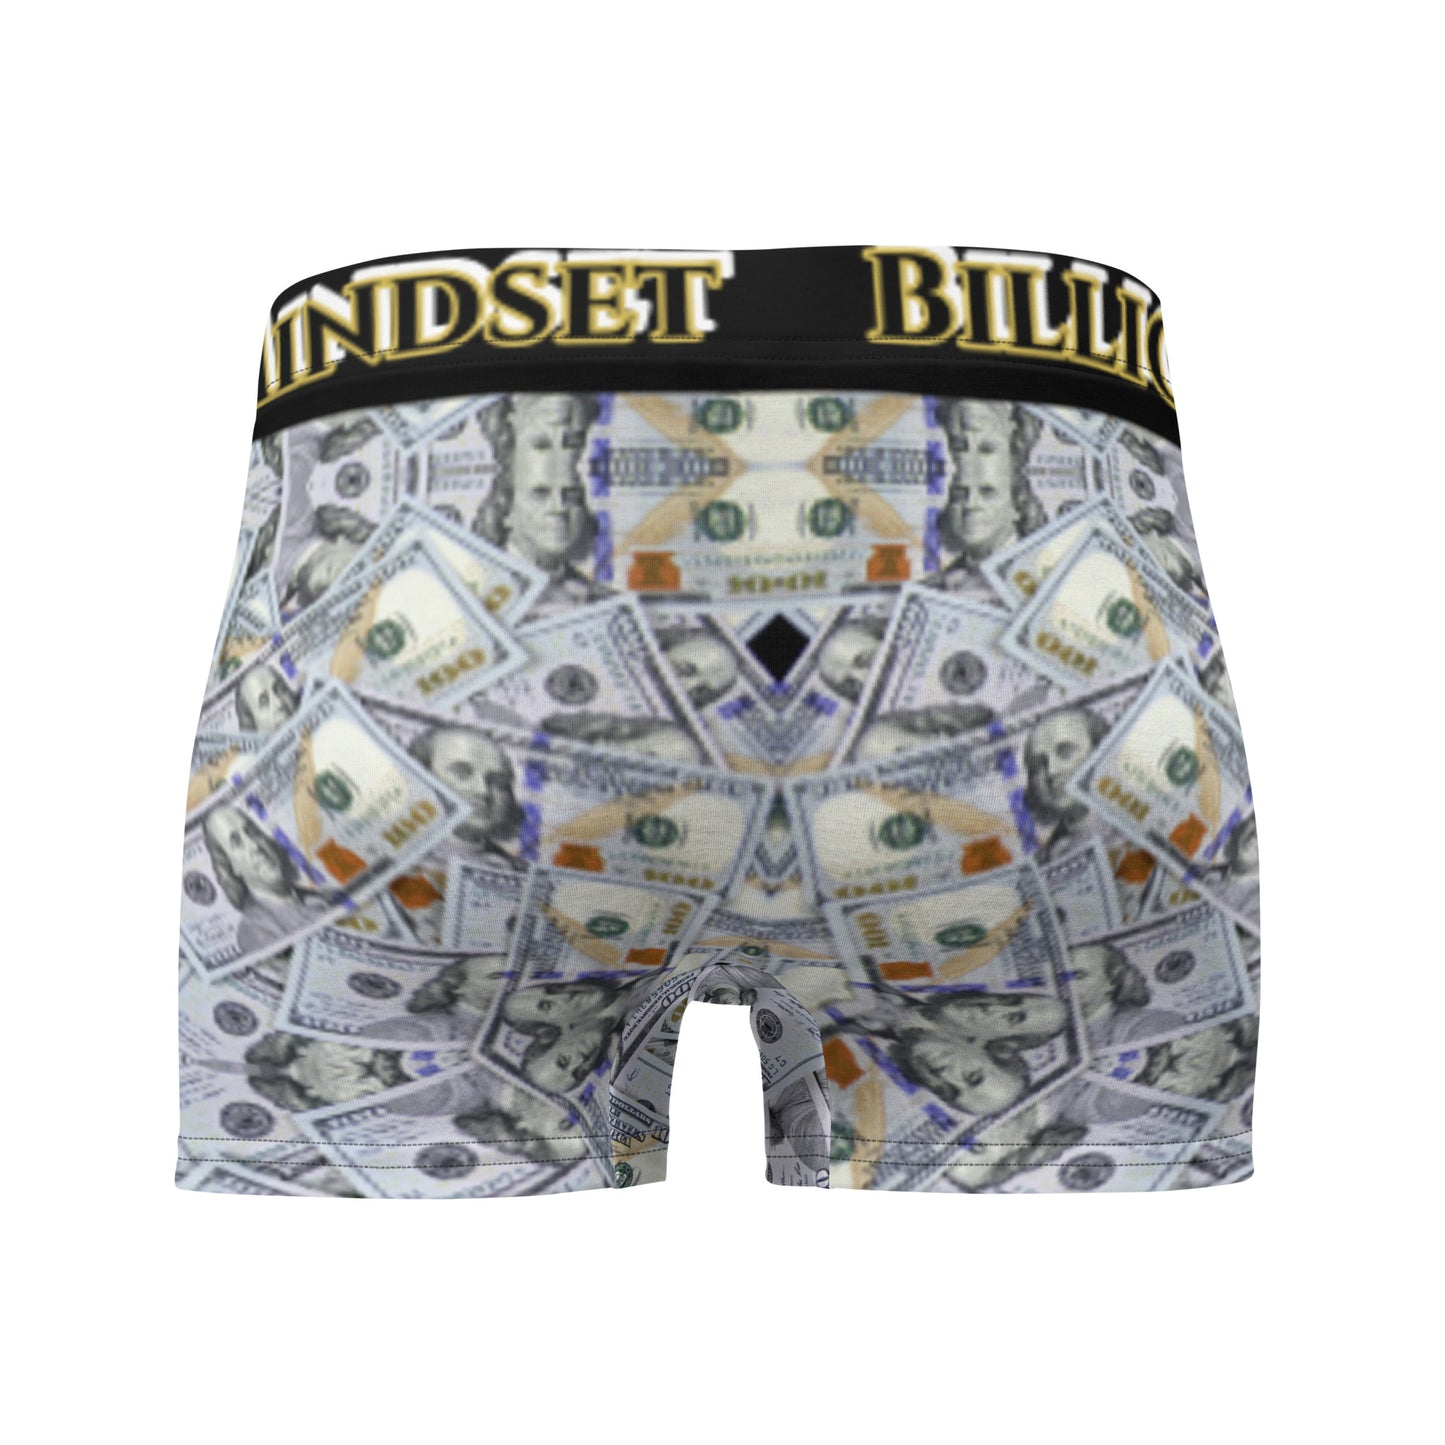 Billionaire Mindset $100 Boxer Briefs